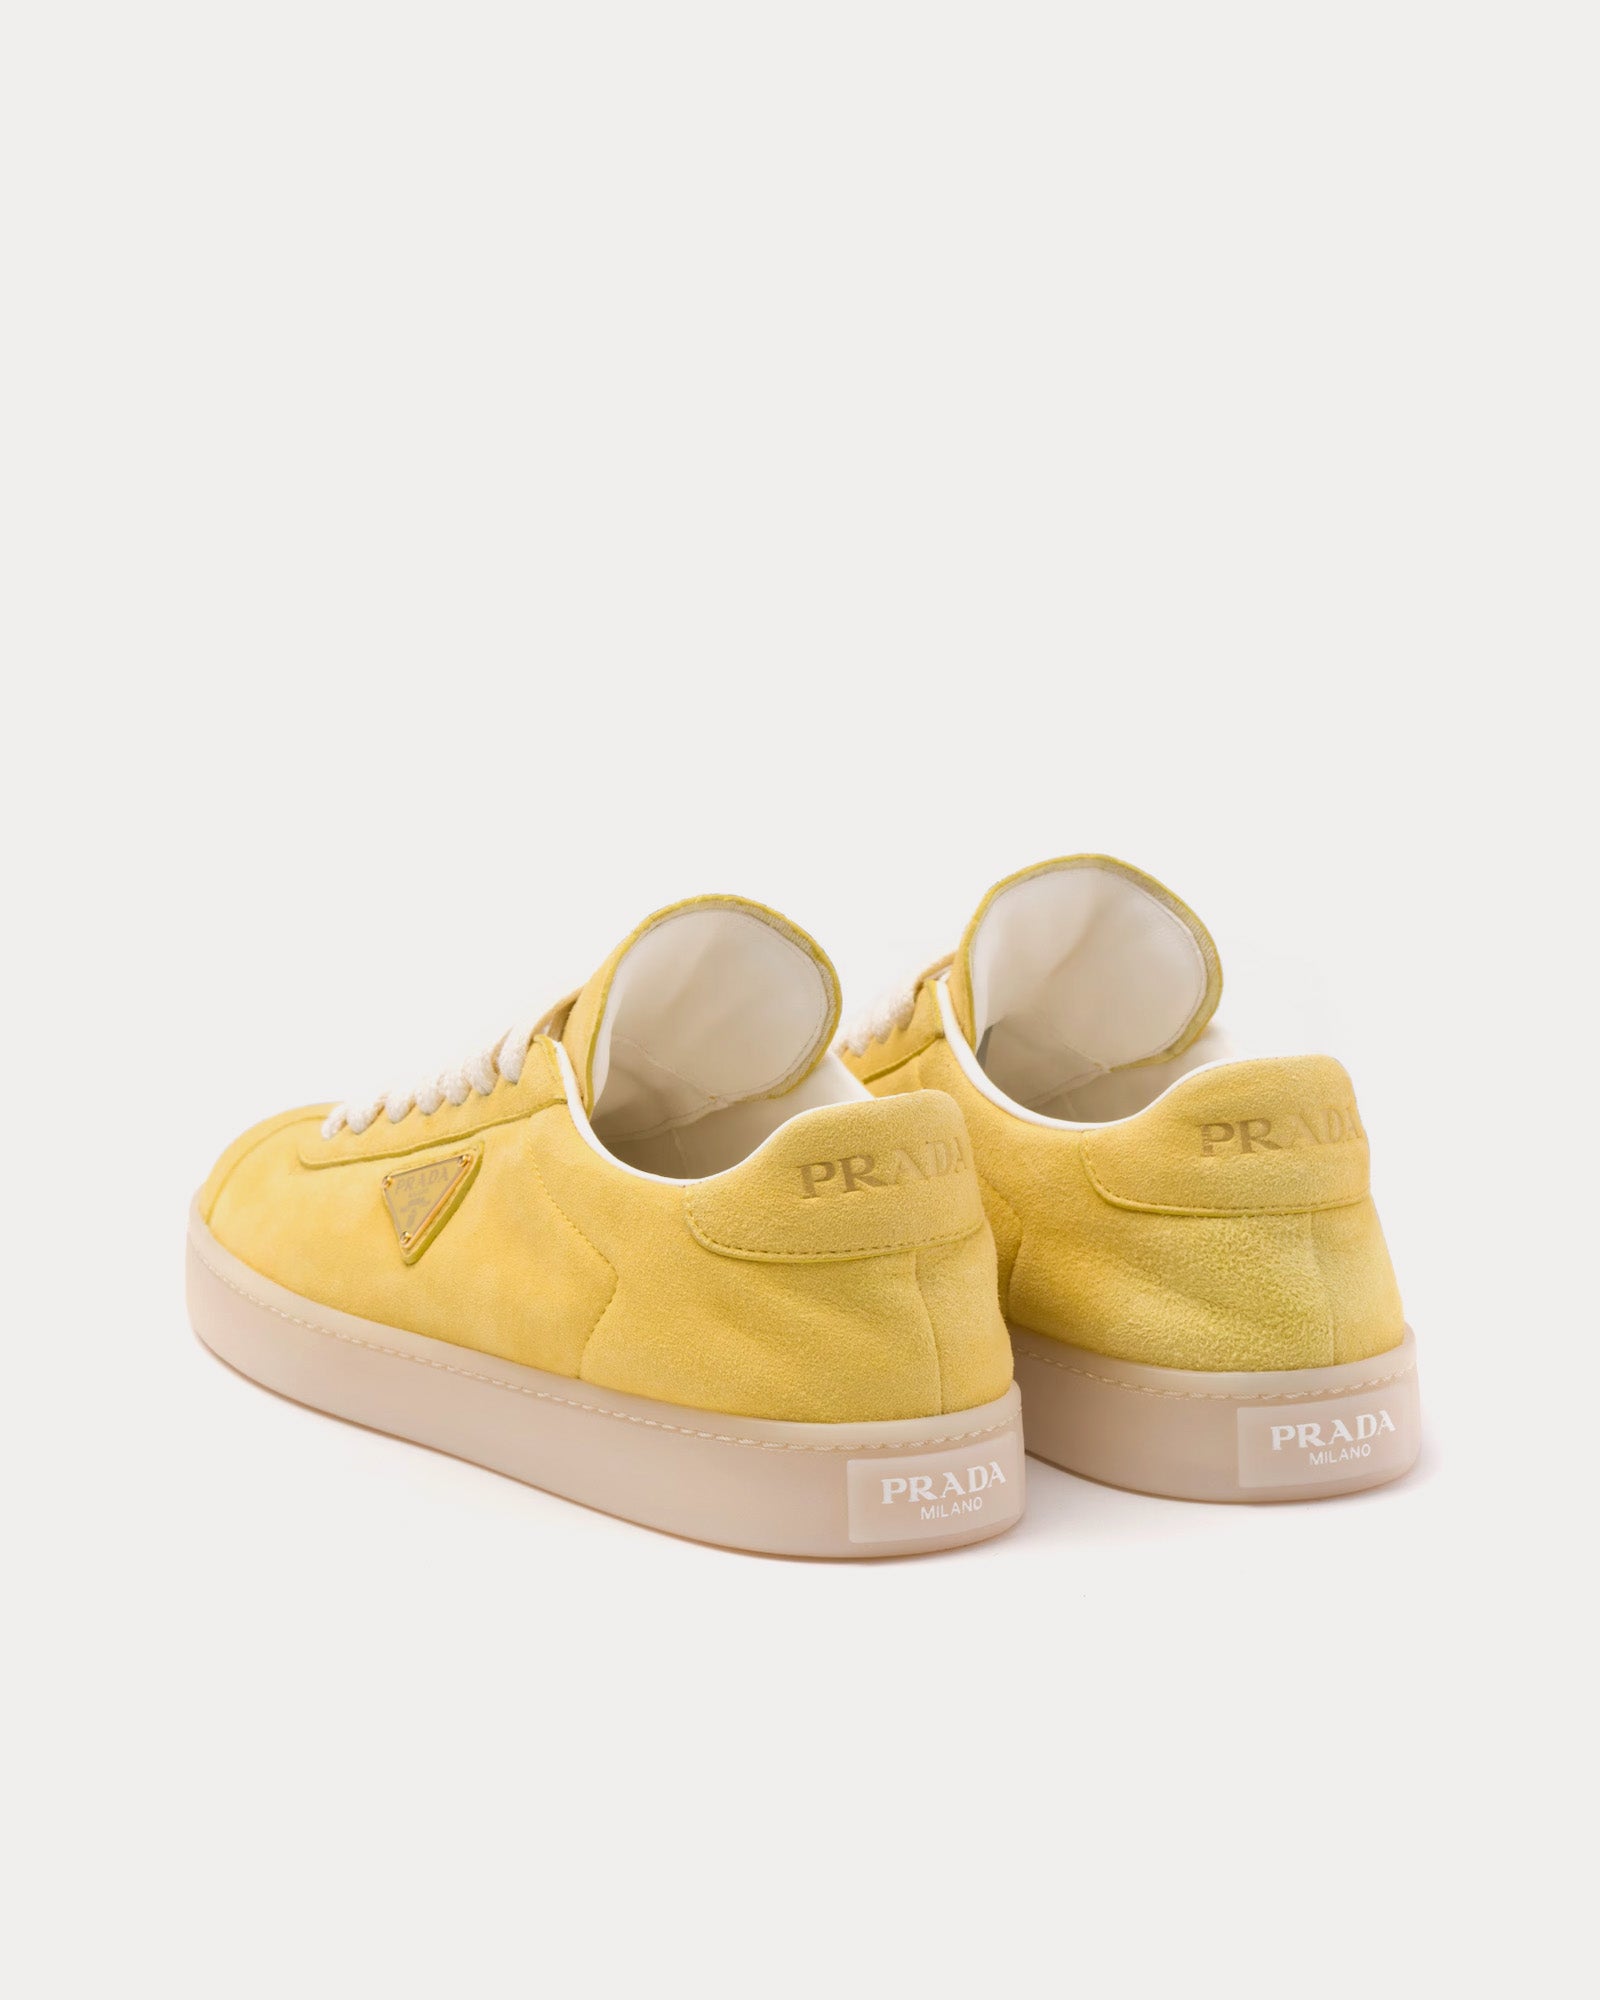 Prada - Lane Suede Sunny Yellow Low Top Sneakers